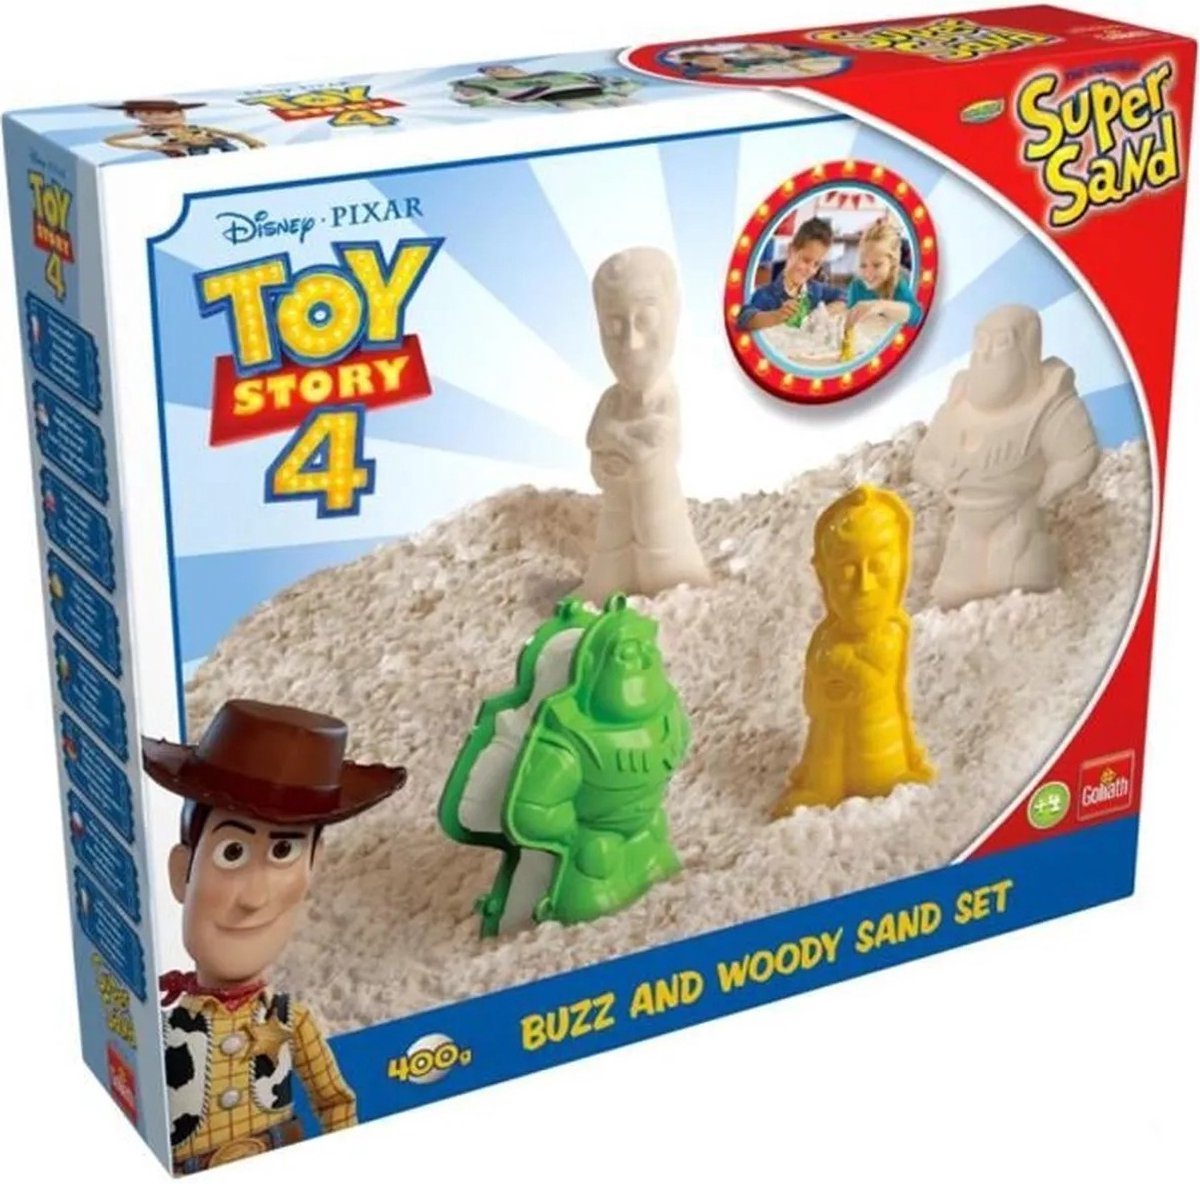 Super Sand Disney Pixar Toy Story 4 Buzz and Woody sand set - speelzand